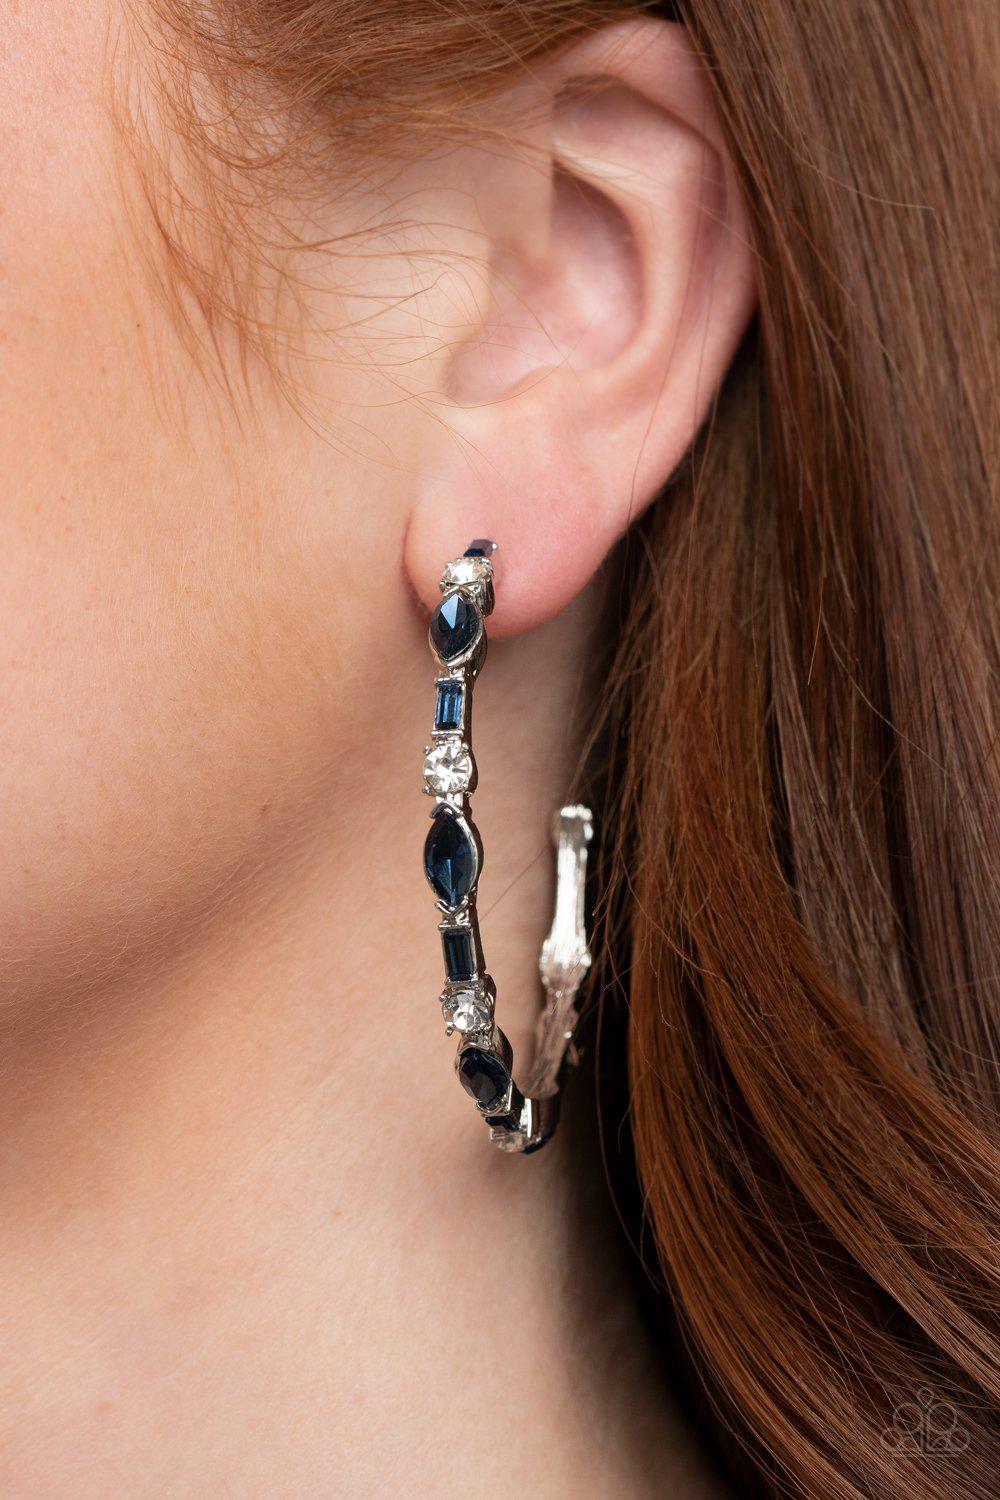 There Goes The Neighborhood Blue Rhinestone Hoop Earrings - Paparazzi Accessories - lightbox -CarasShop.com - $5 Jewelry by Cara Jewels